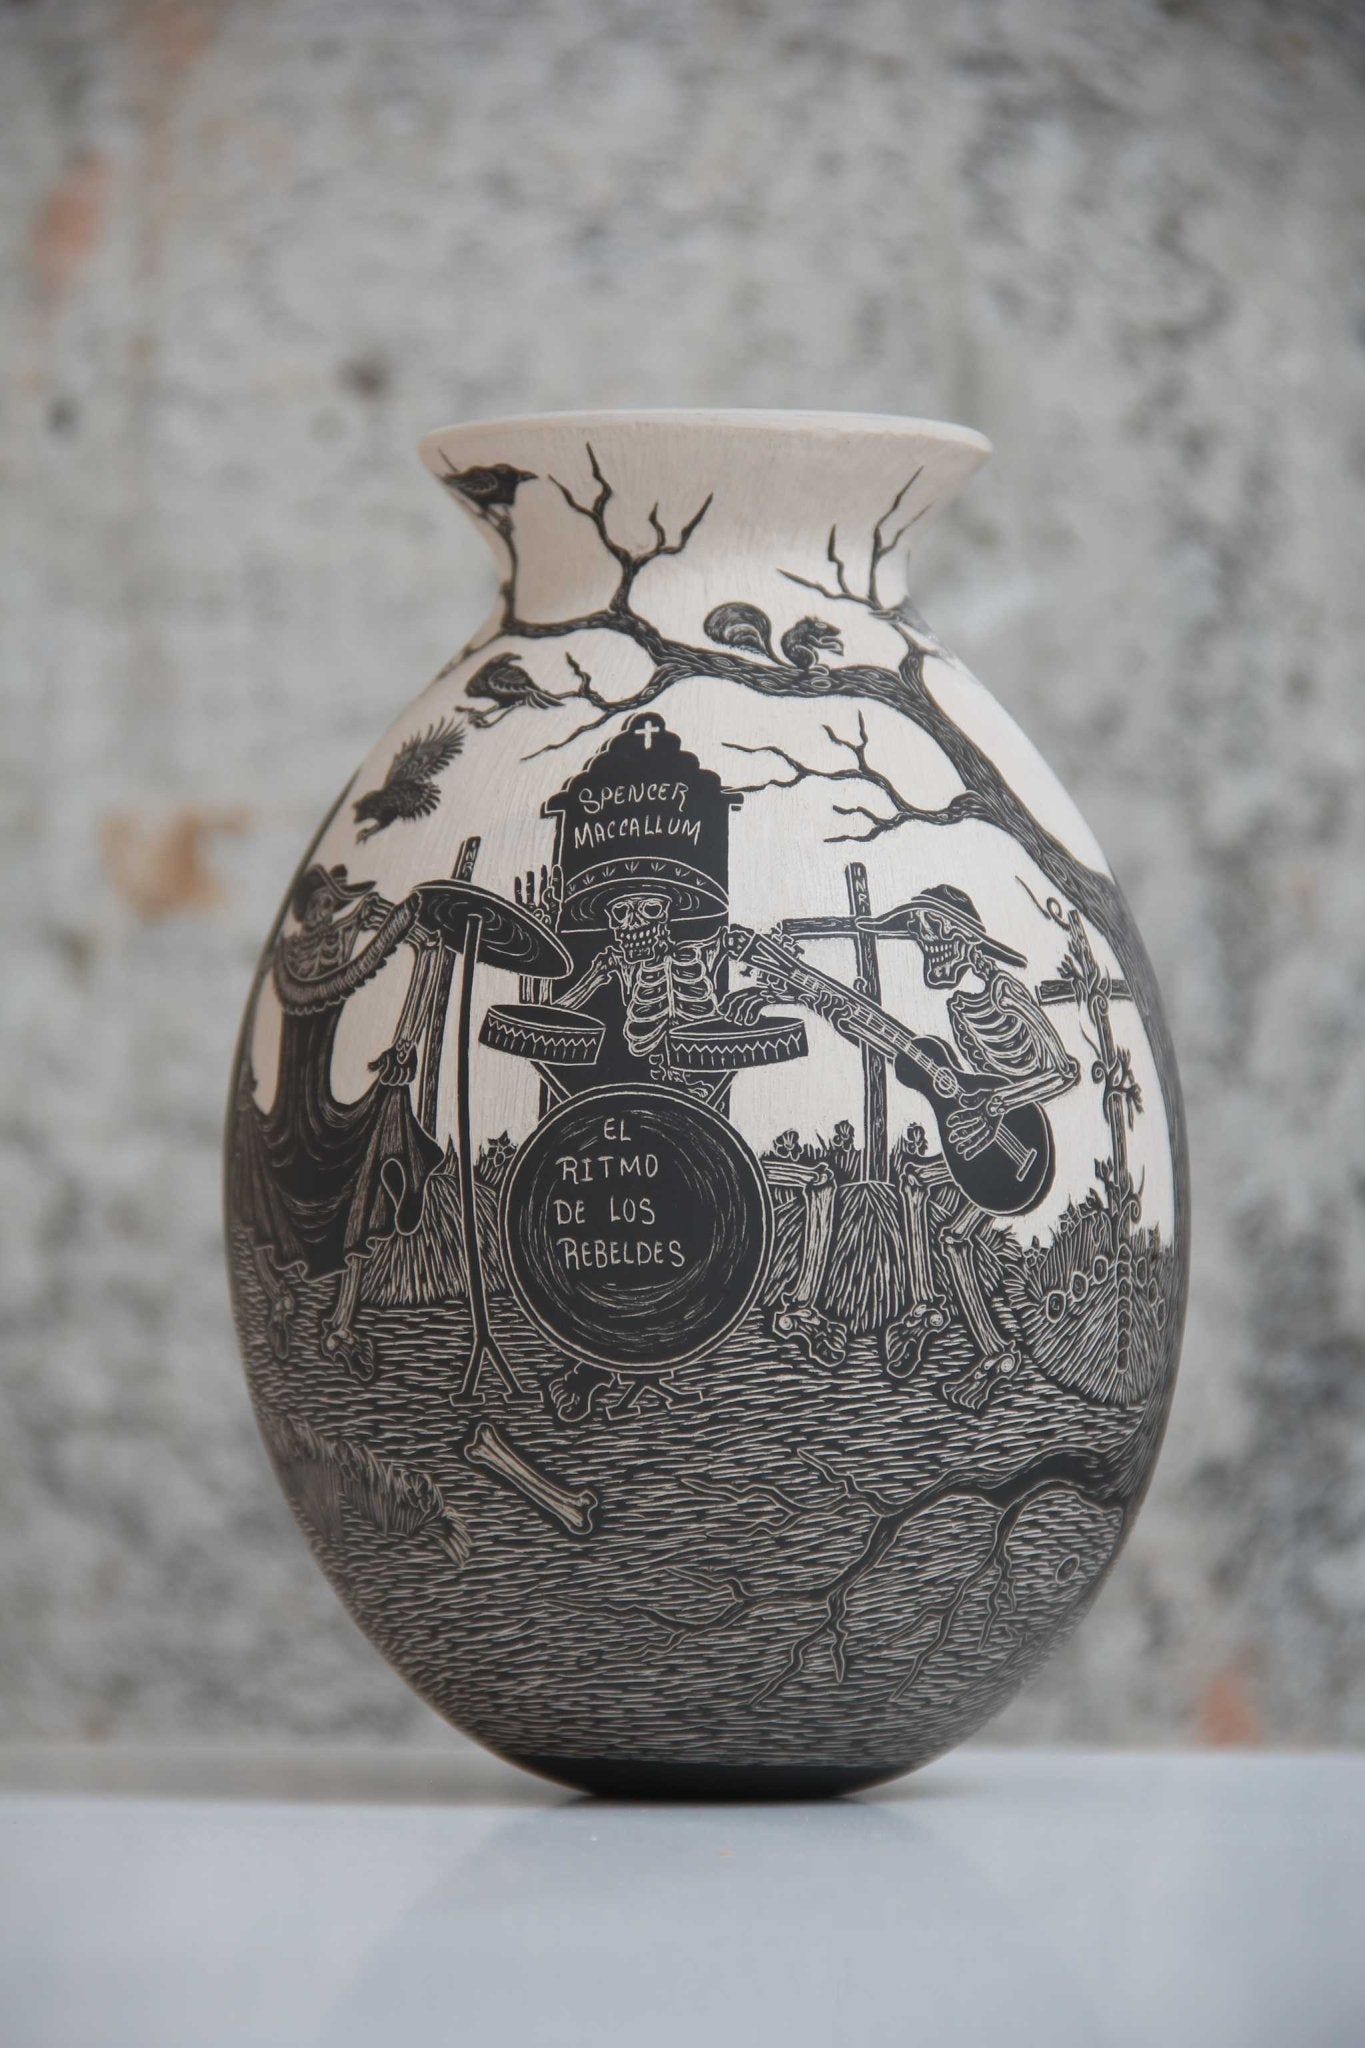 Mata Ortiz Ceramics - Restless Cemetery - Day - Huichol Art - Marakame